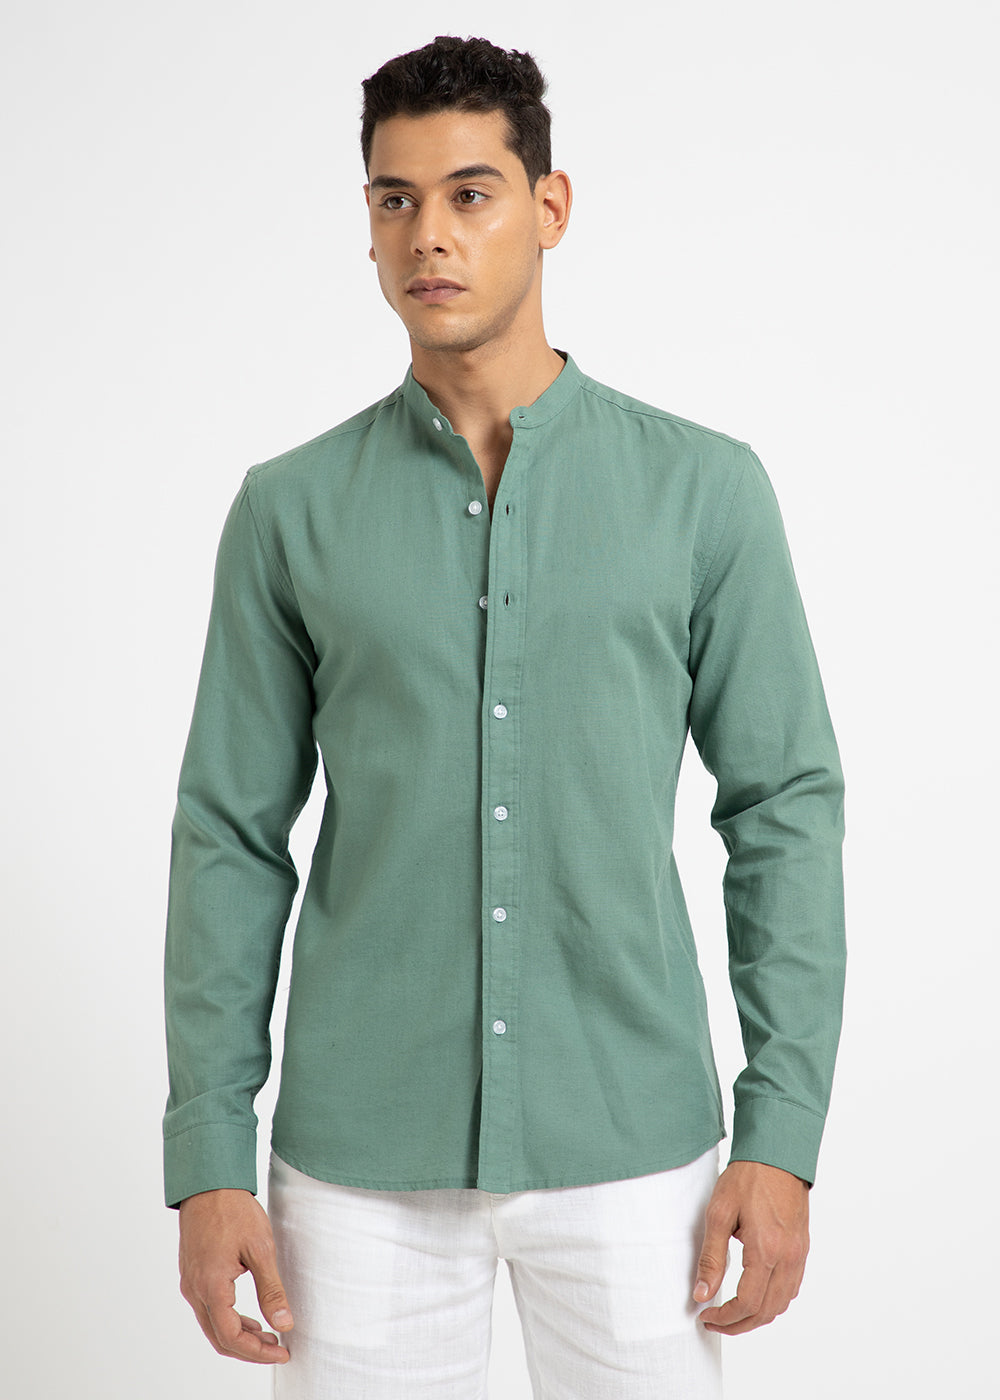 Atlantis Green Cotton Linen Shirt